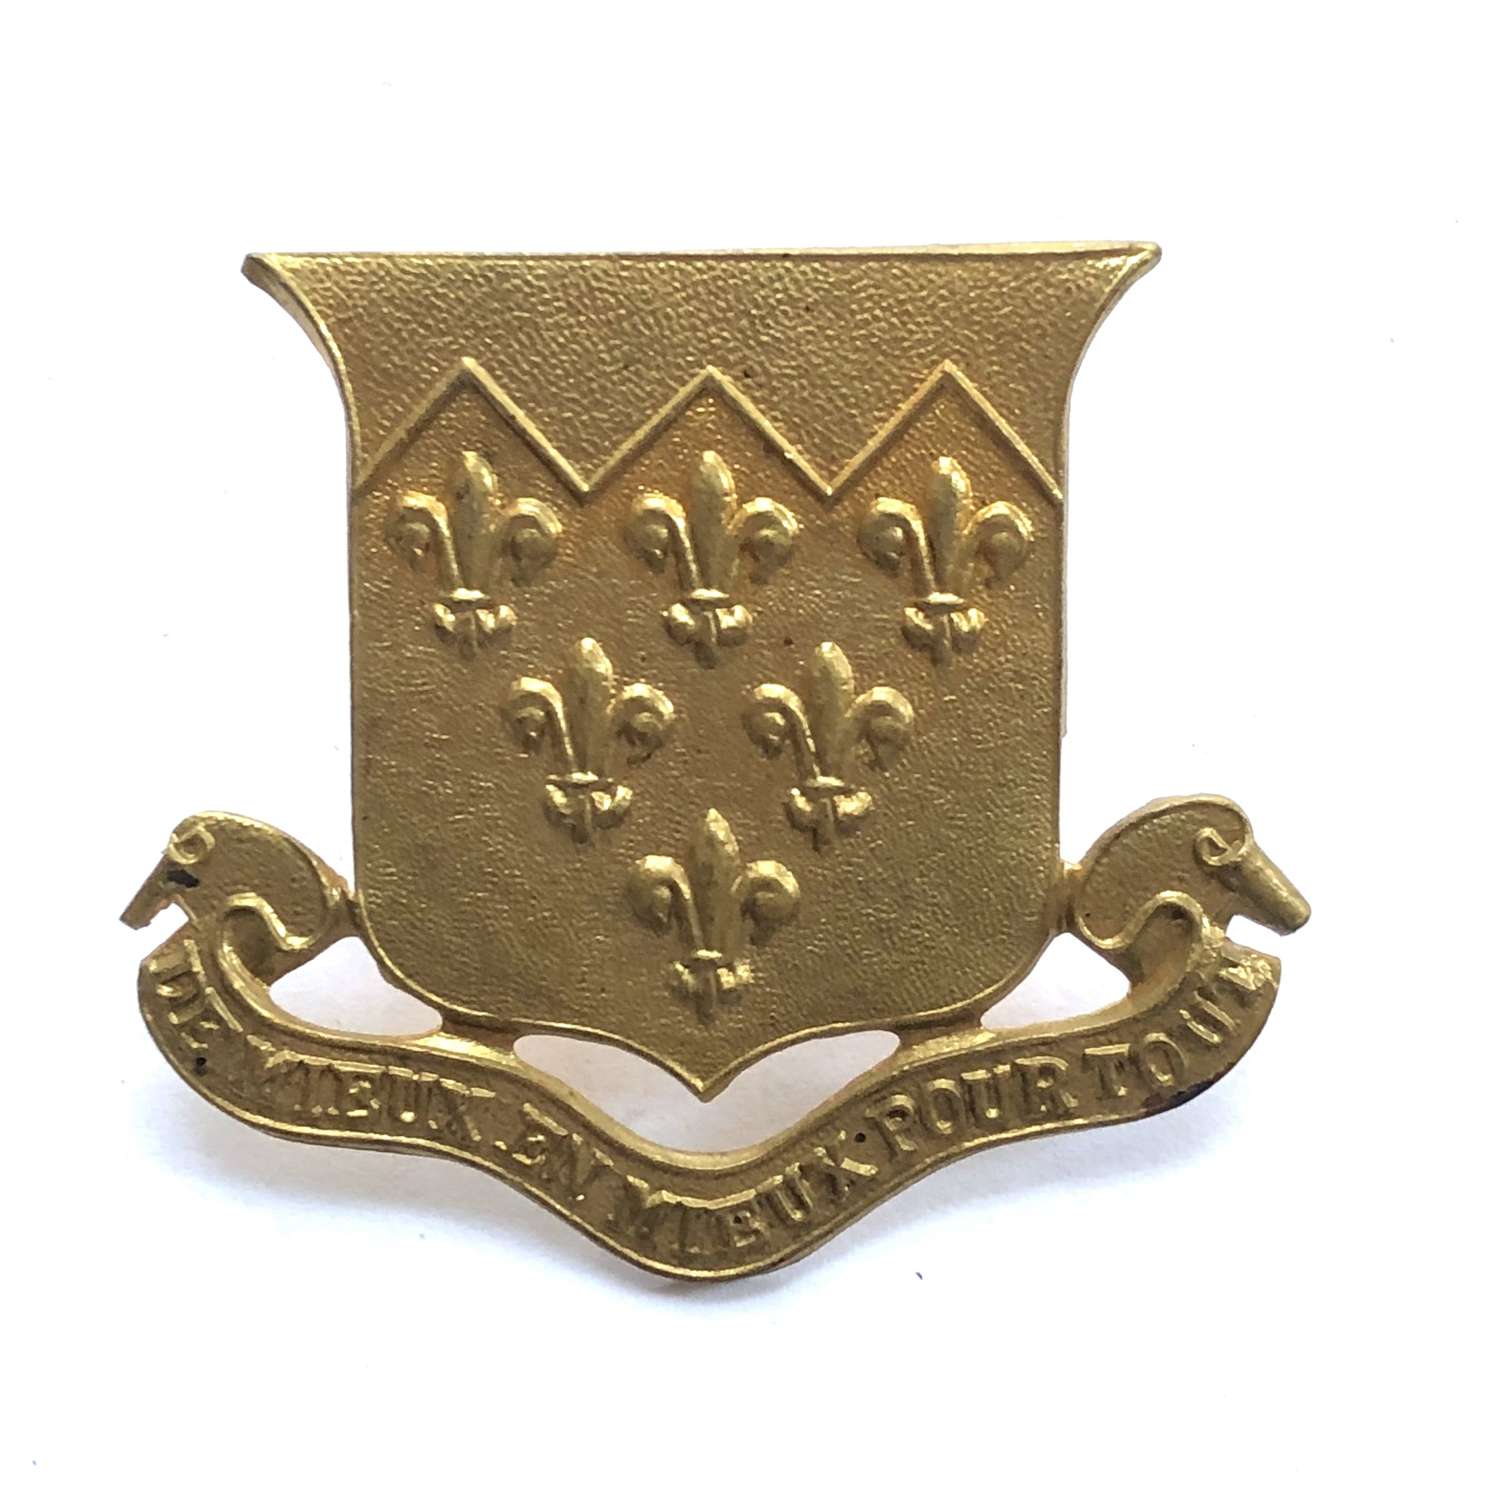 The Paston Scholl OTC cap badge